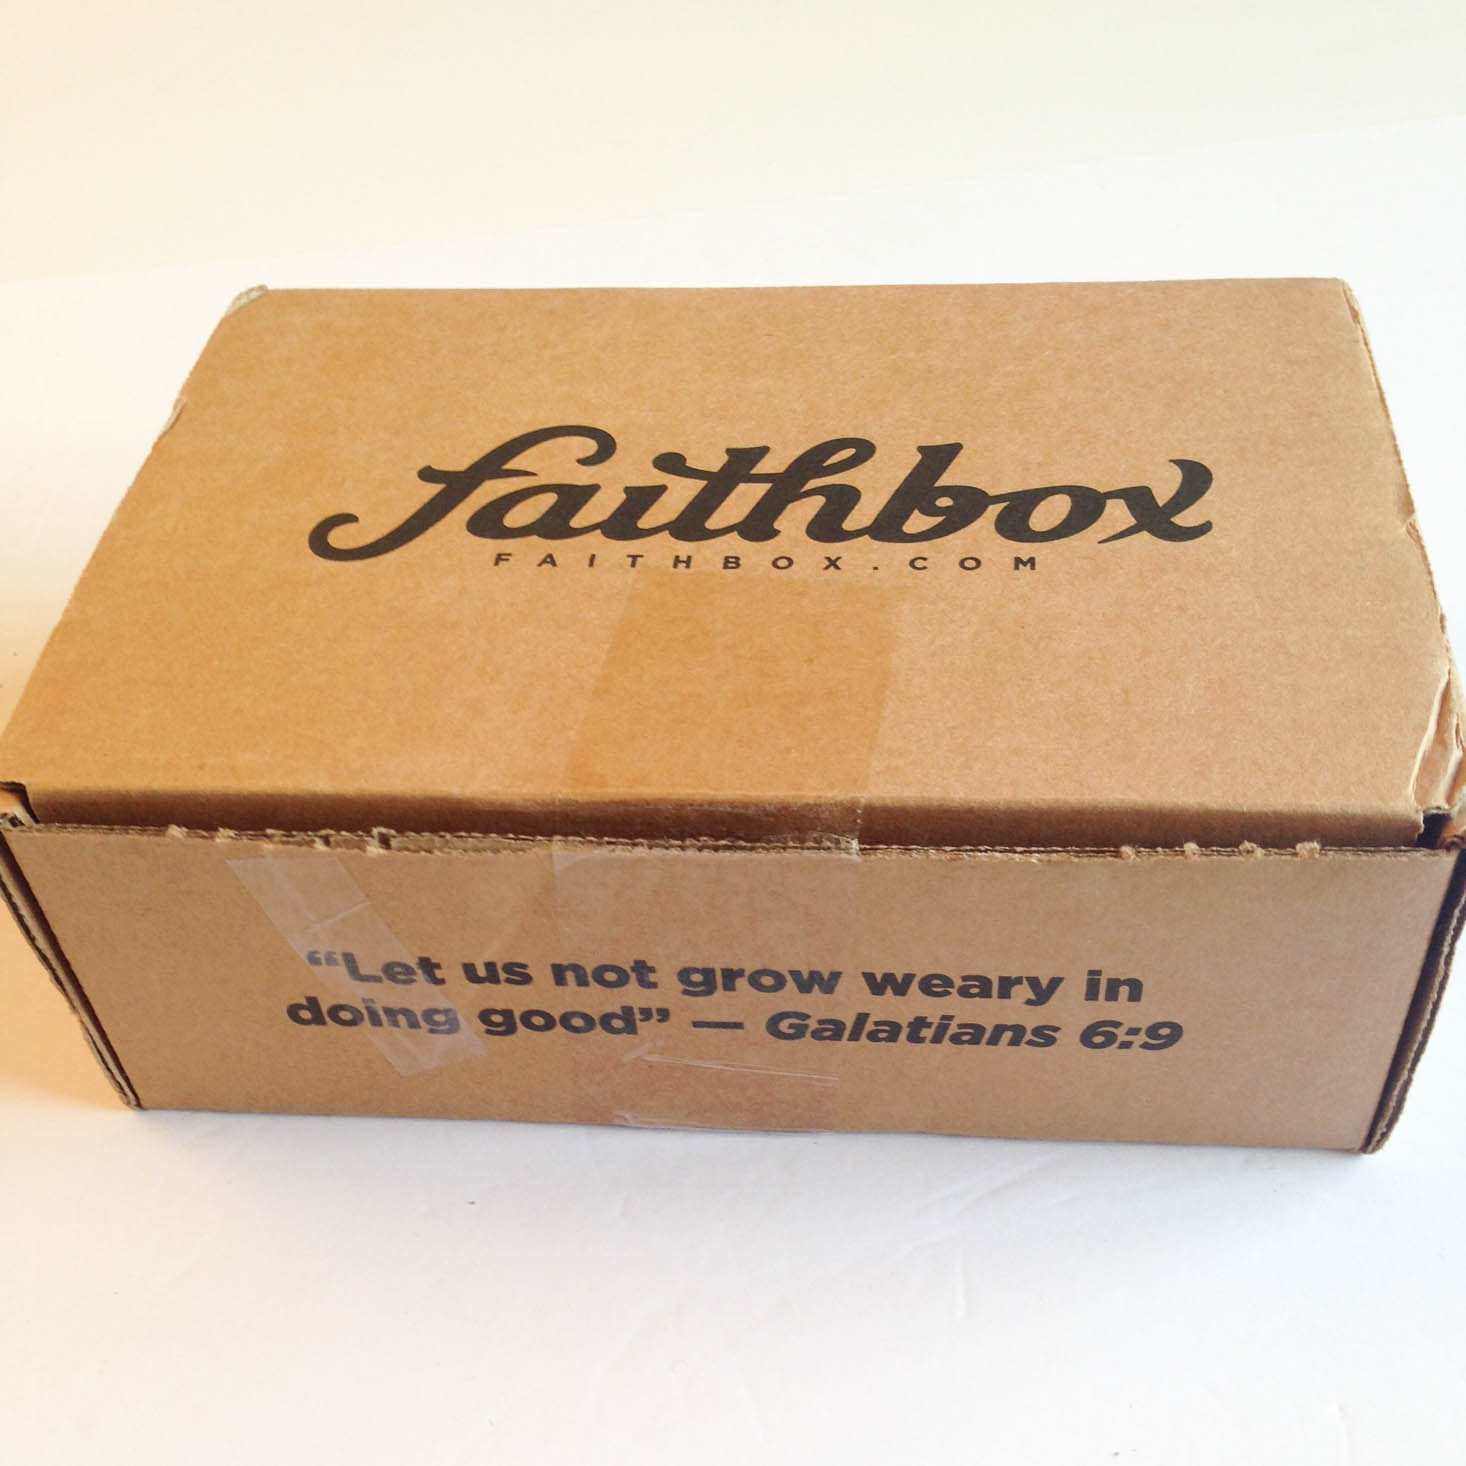 Faithbox Subscription Box Review – December 2016